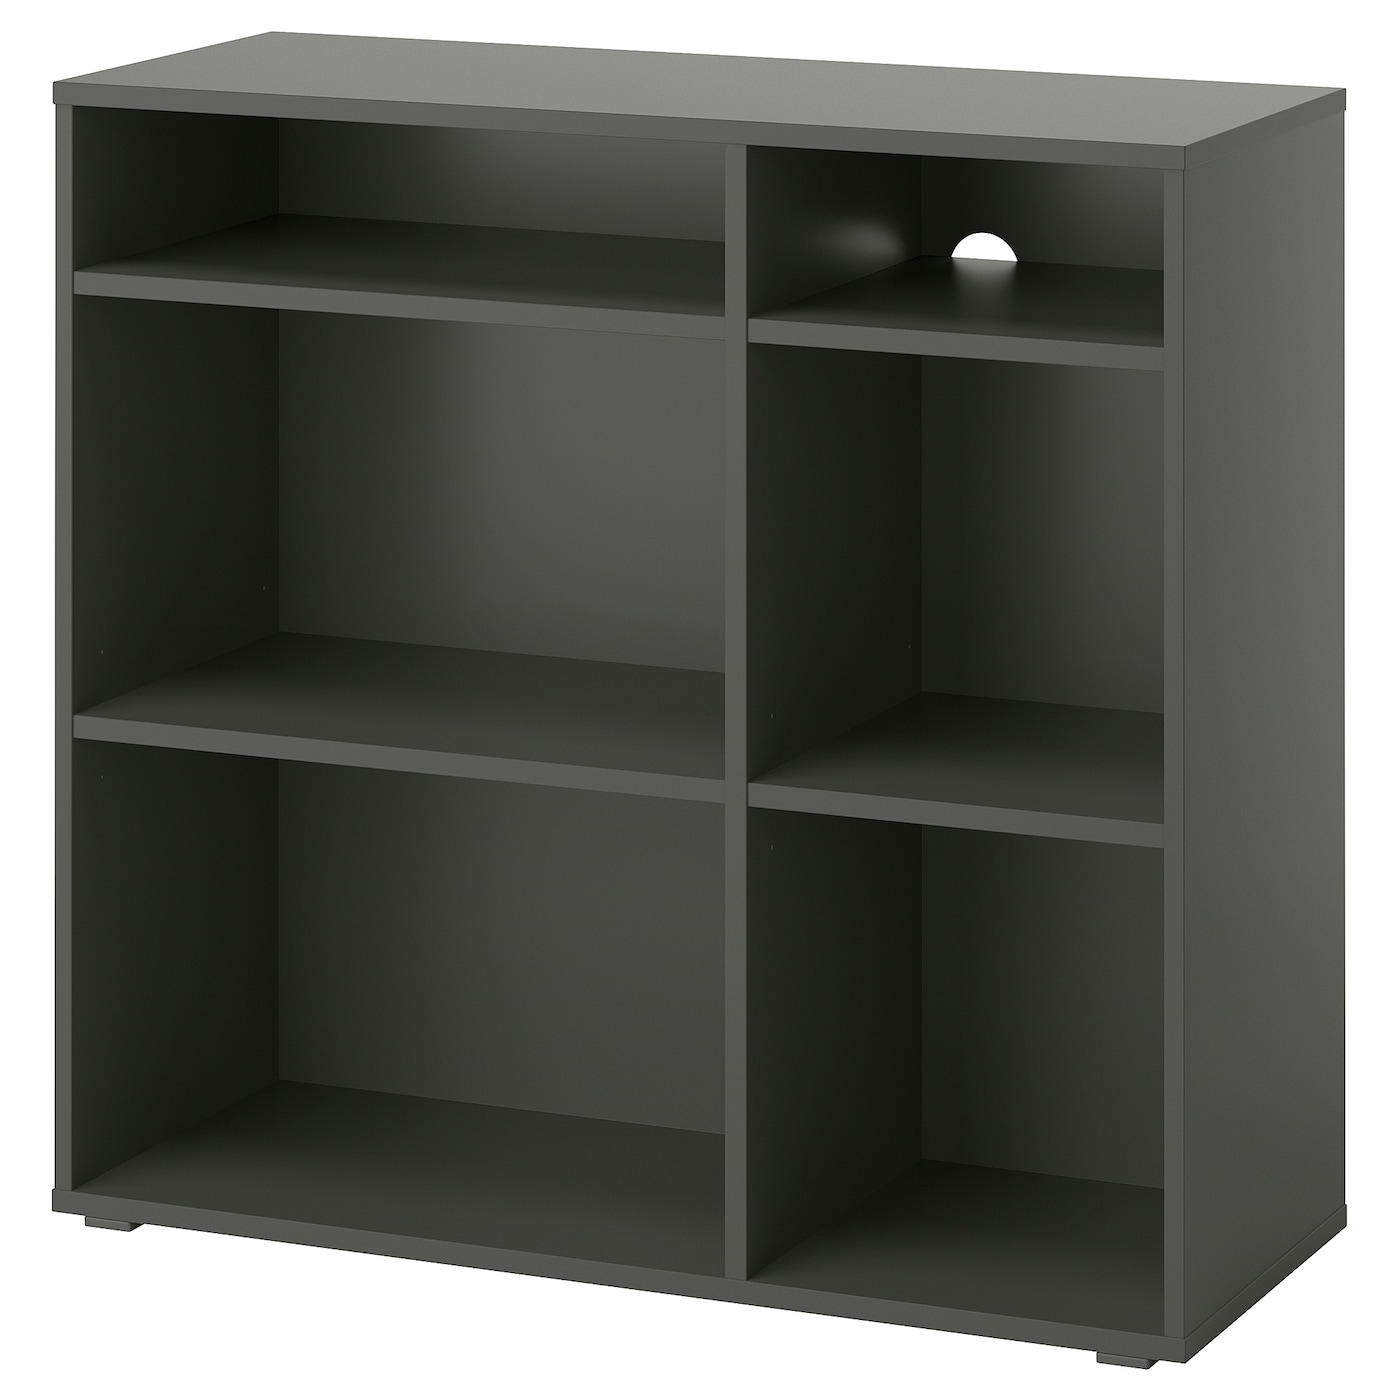 Книжный шкаф  - VIHALS IKEA/ ВИХАЛС ИКЕА,95х37х90 см,  черный